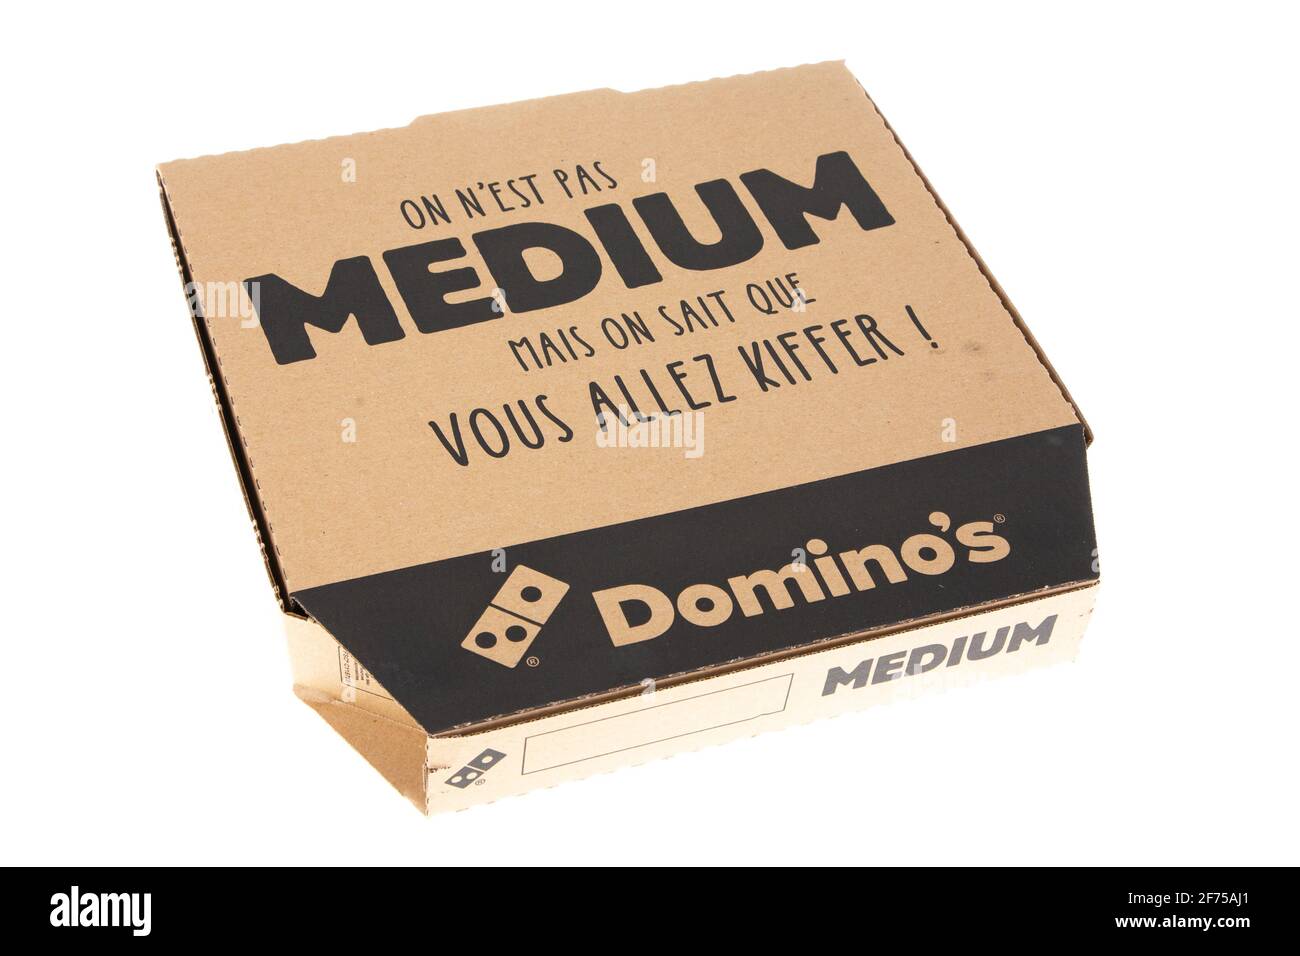 Bordeaux , Aquitaine France - 03 22 2021 : Domino's pizza logo and sign on medium box to go restaurant Dominos American multinational pizza restaurant Stock Photo